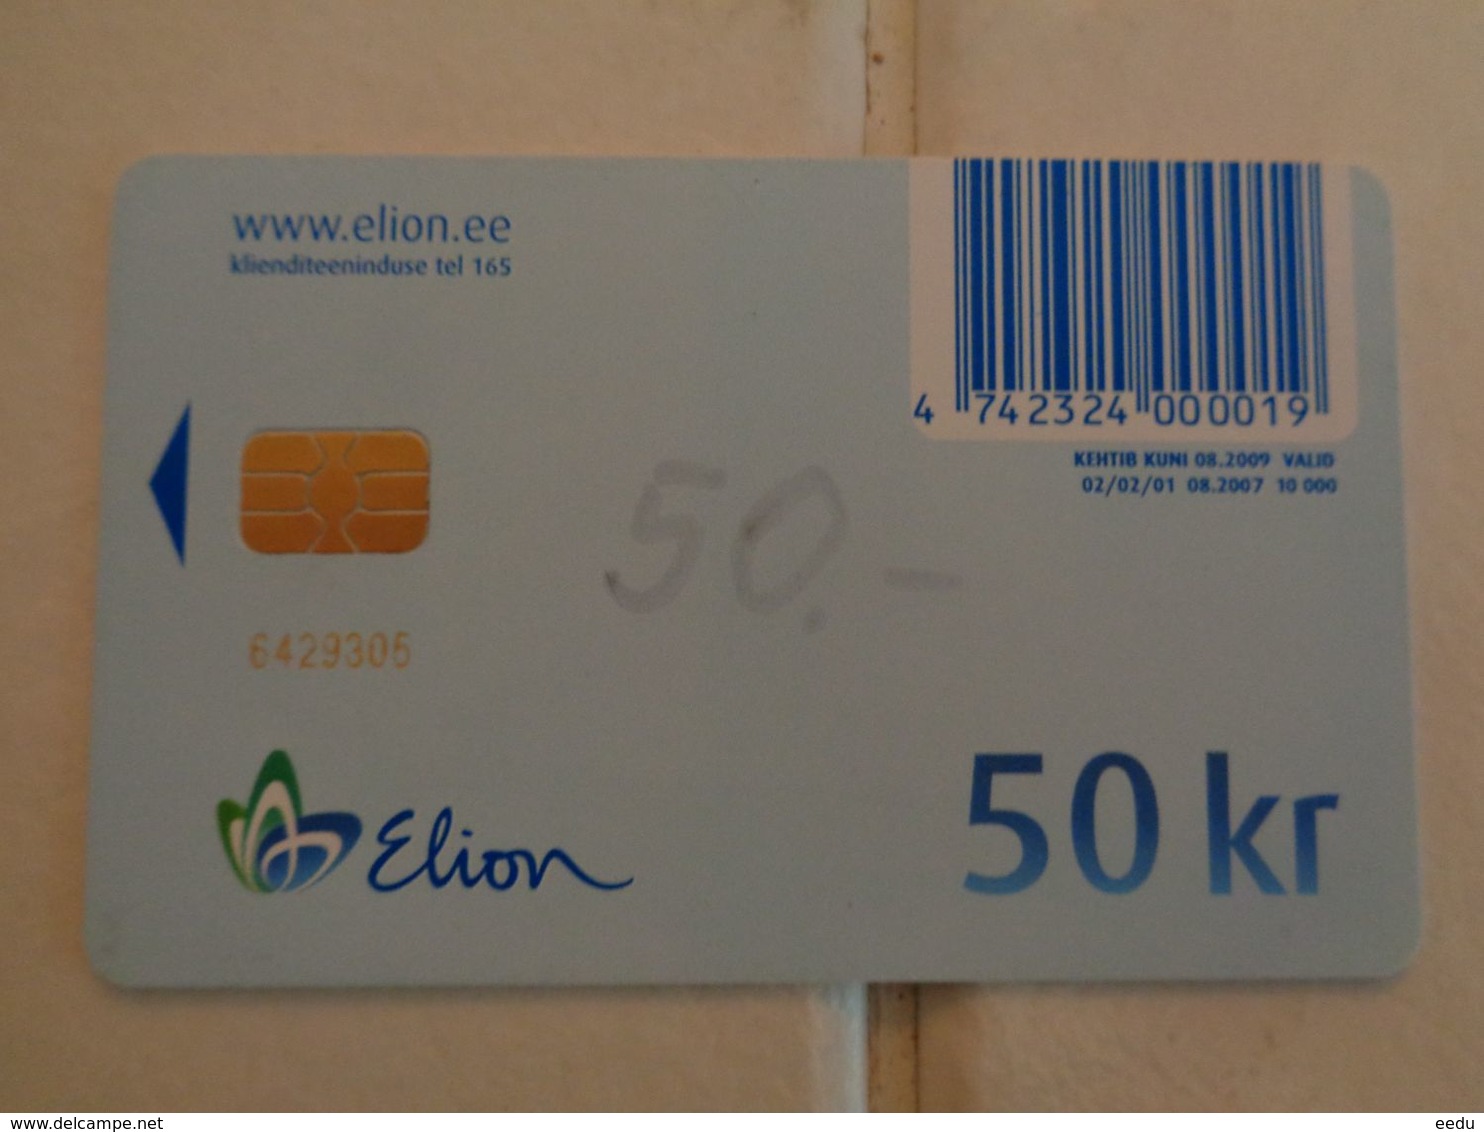 Estonia Phonecard ELION E021 ( LOOK CARD BACKSIDE ) - Estonia